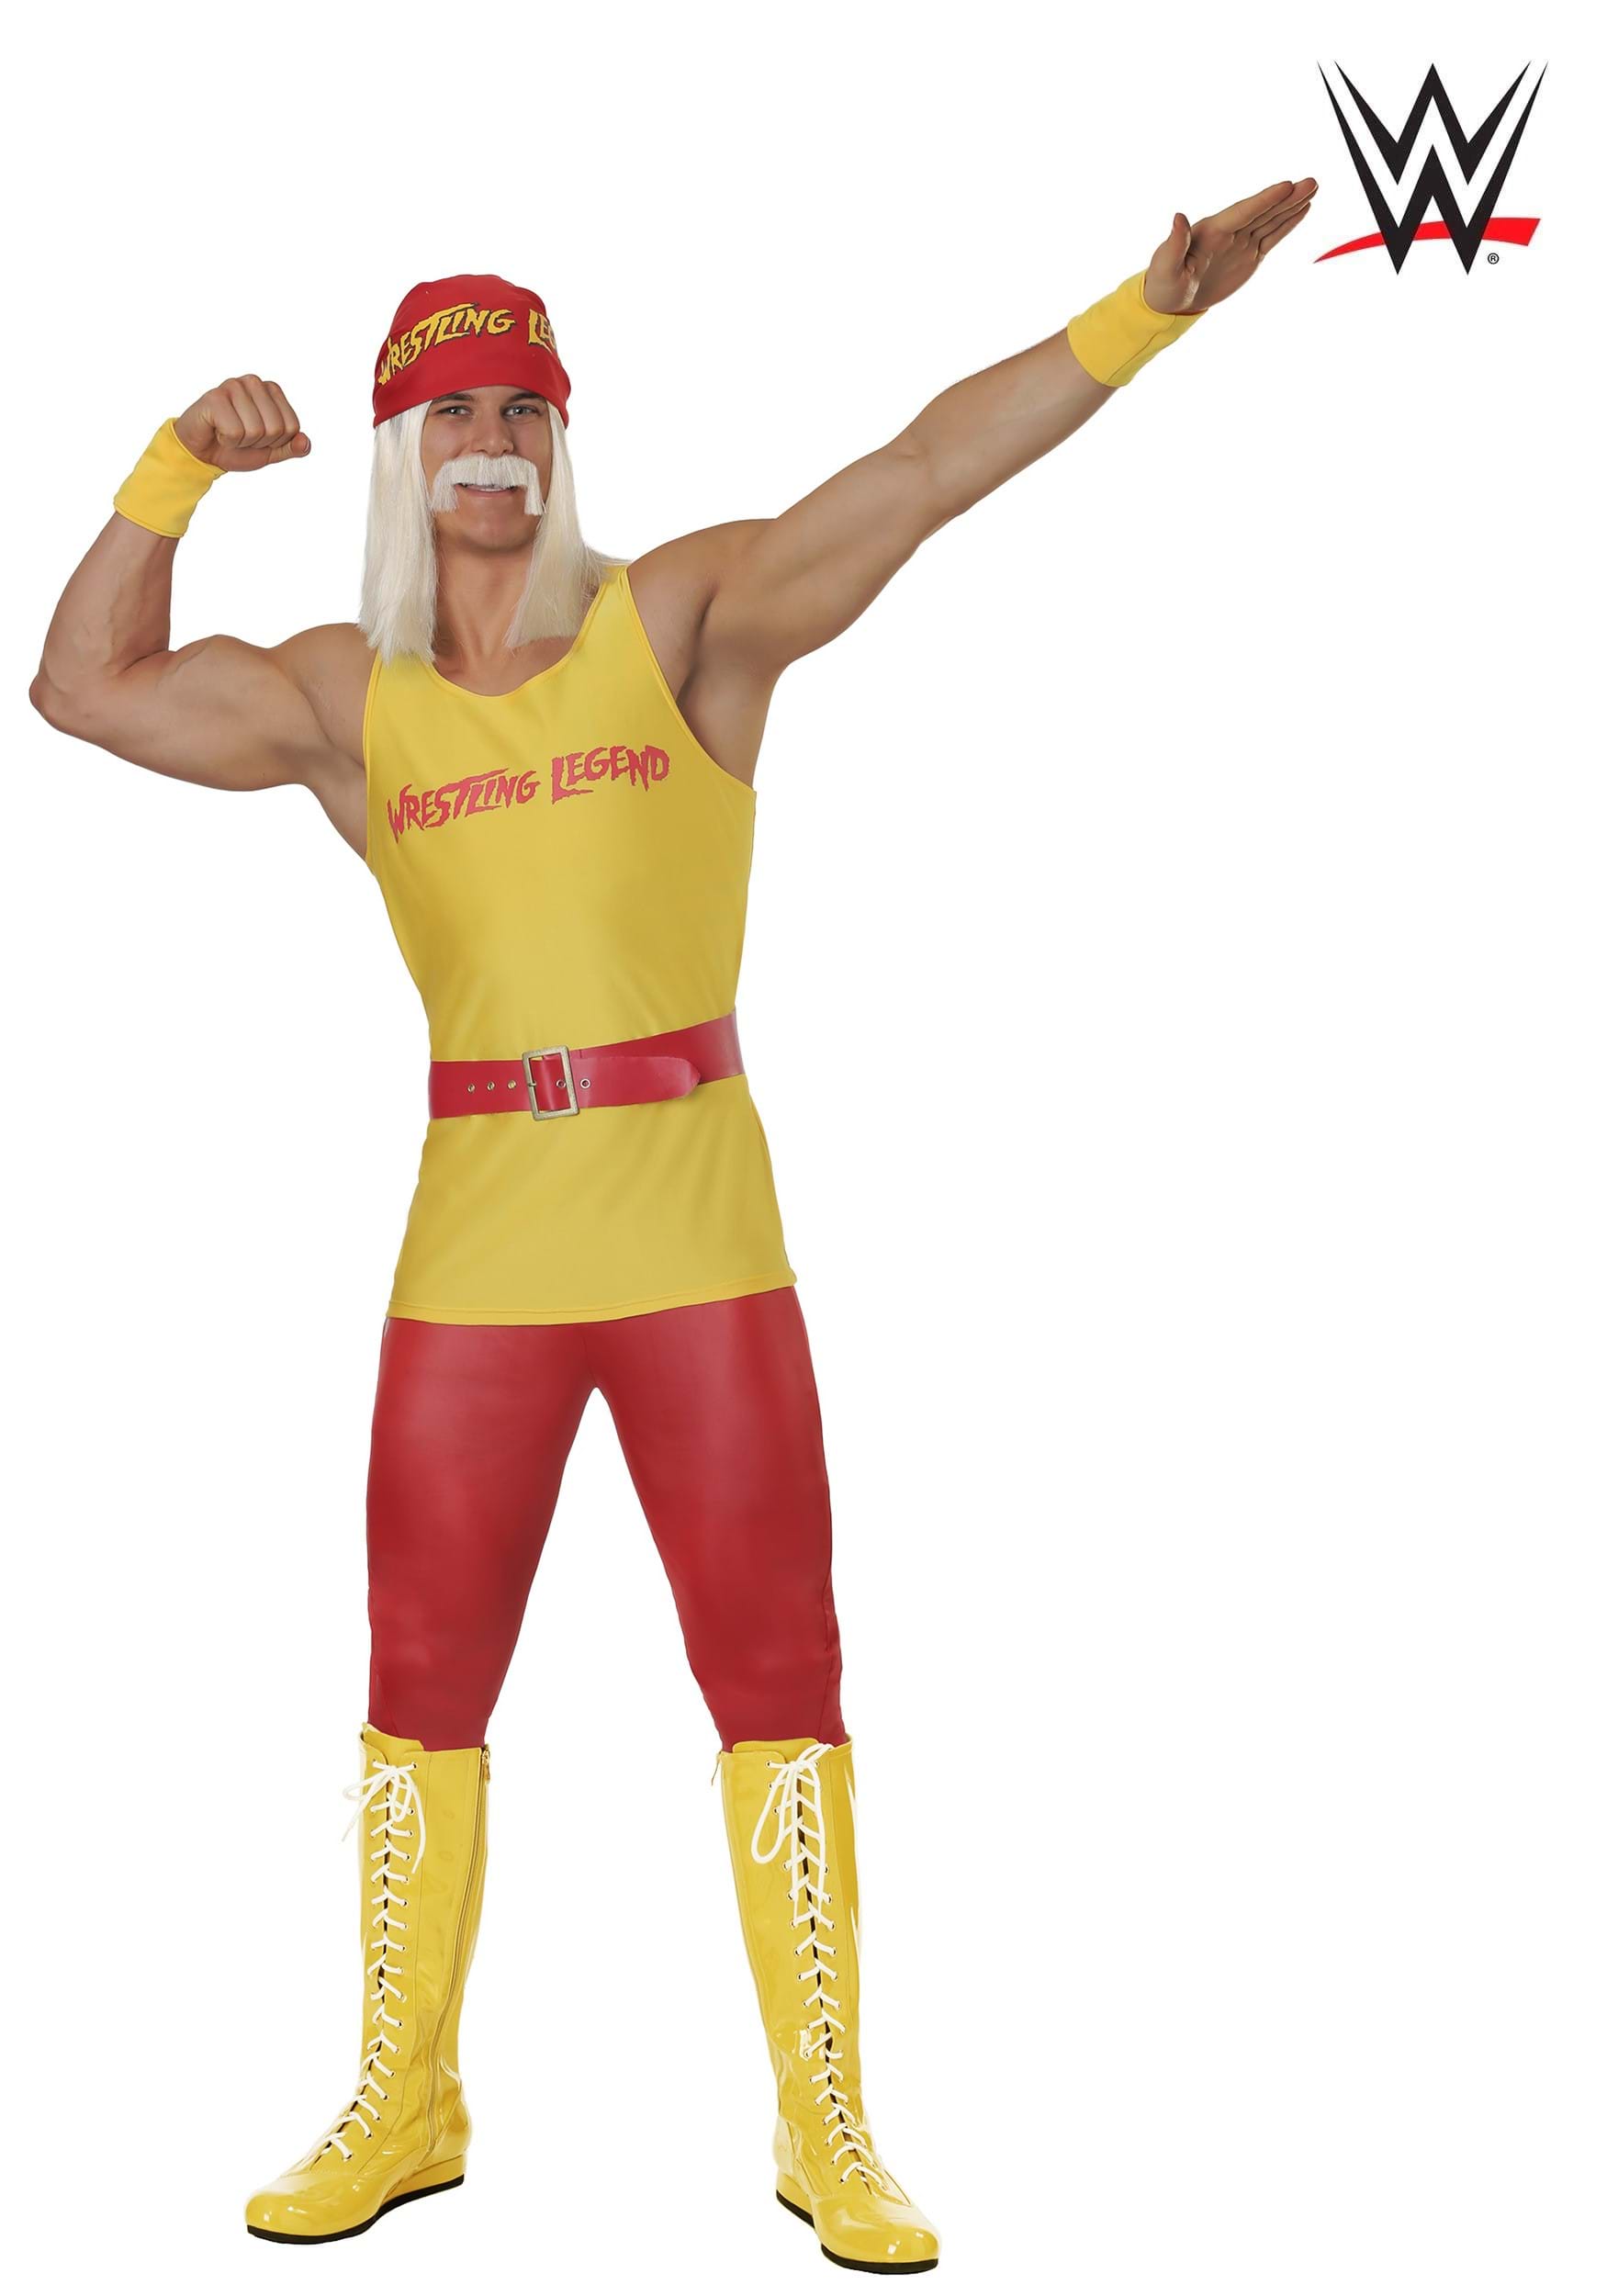 Men's Wrestling Legend Plus Size Costume